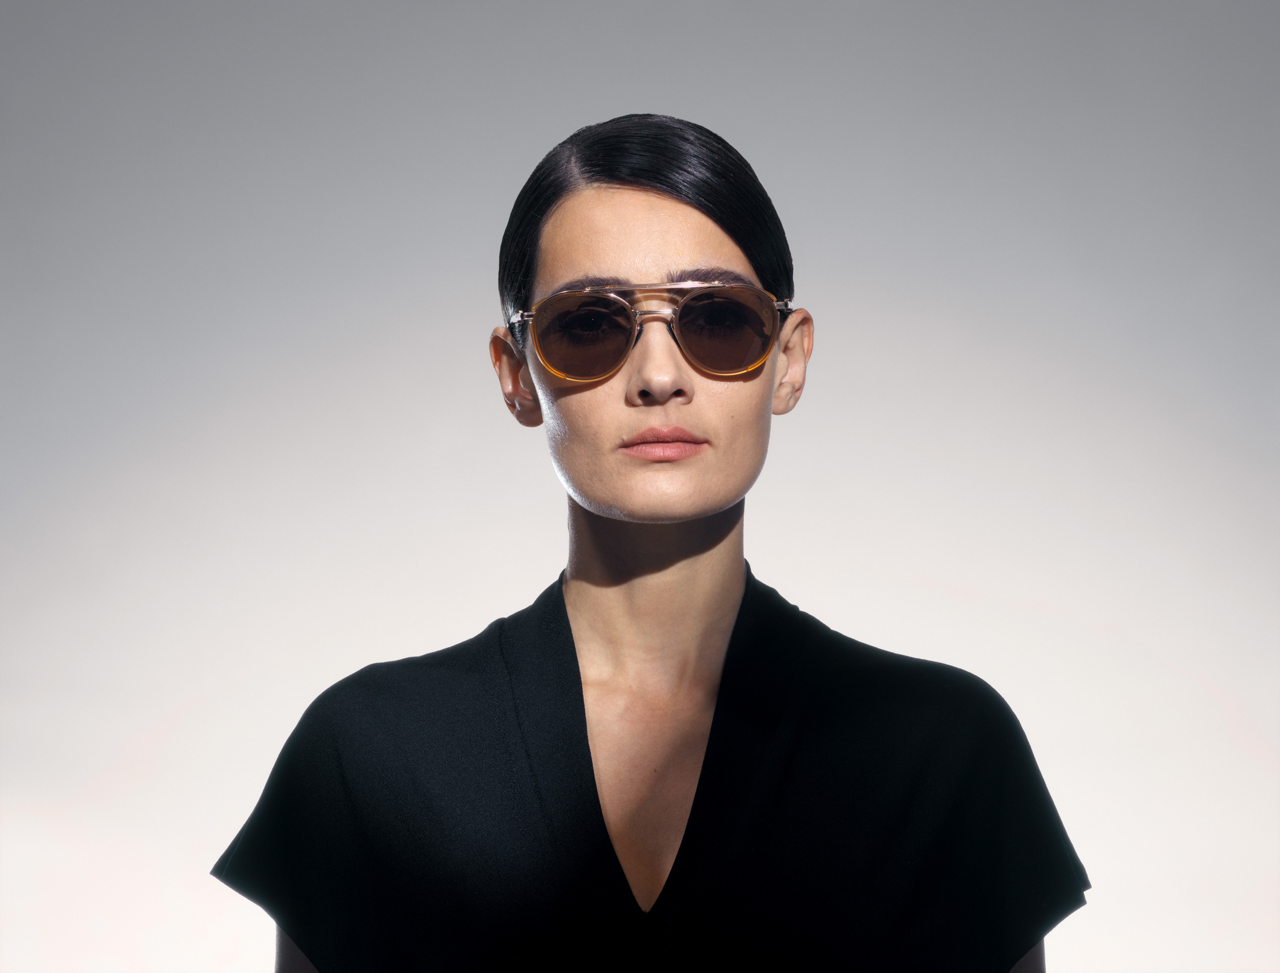 akoni skymapper sunglasses lifestyle front female